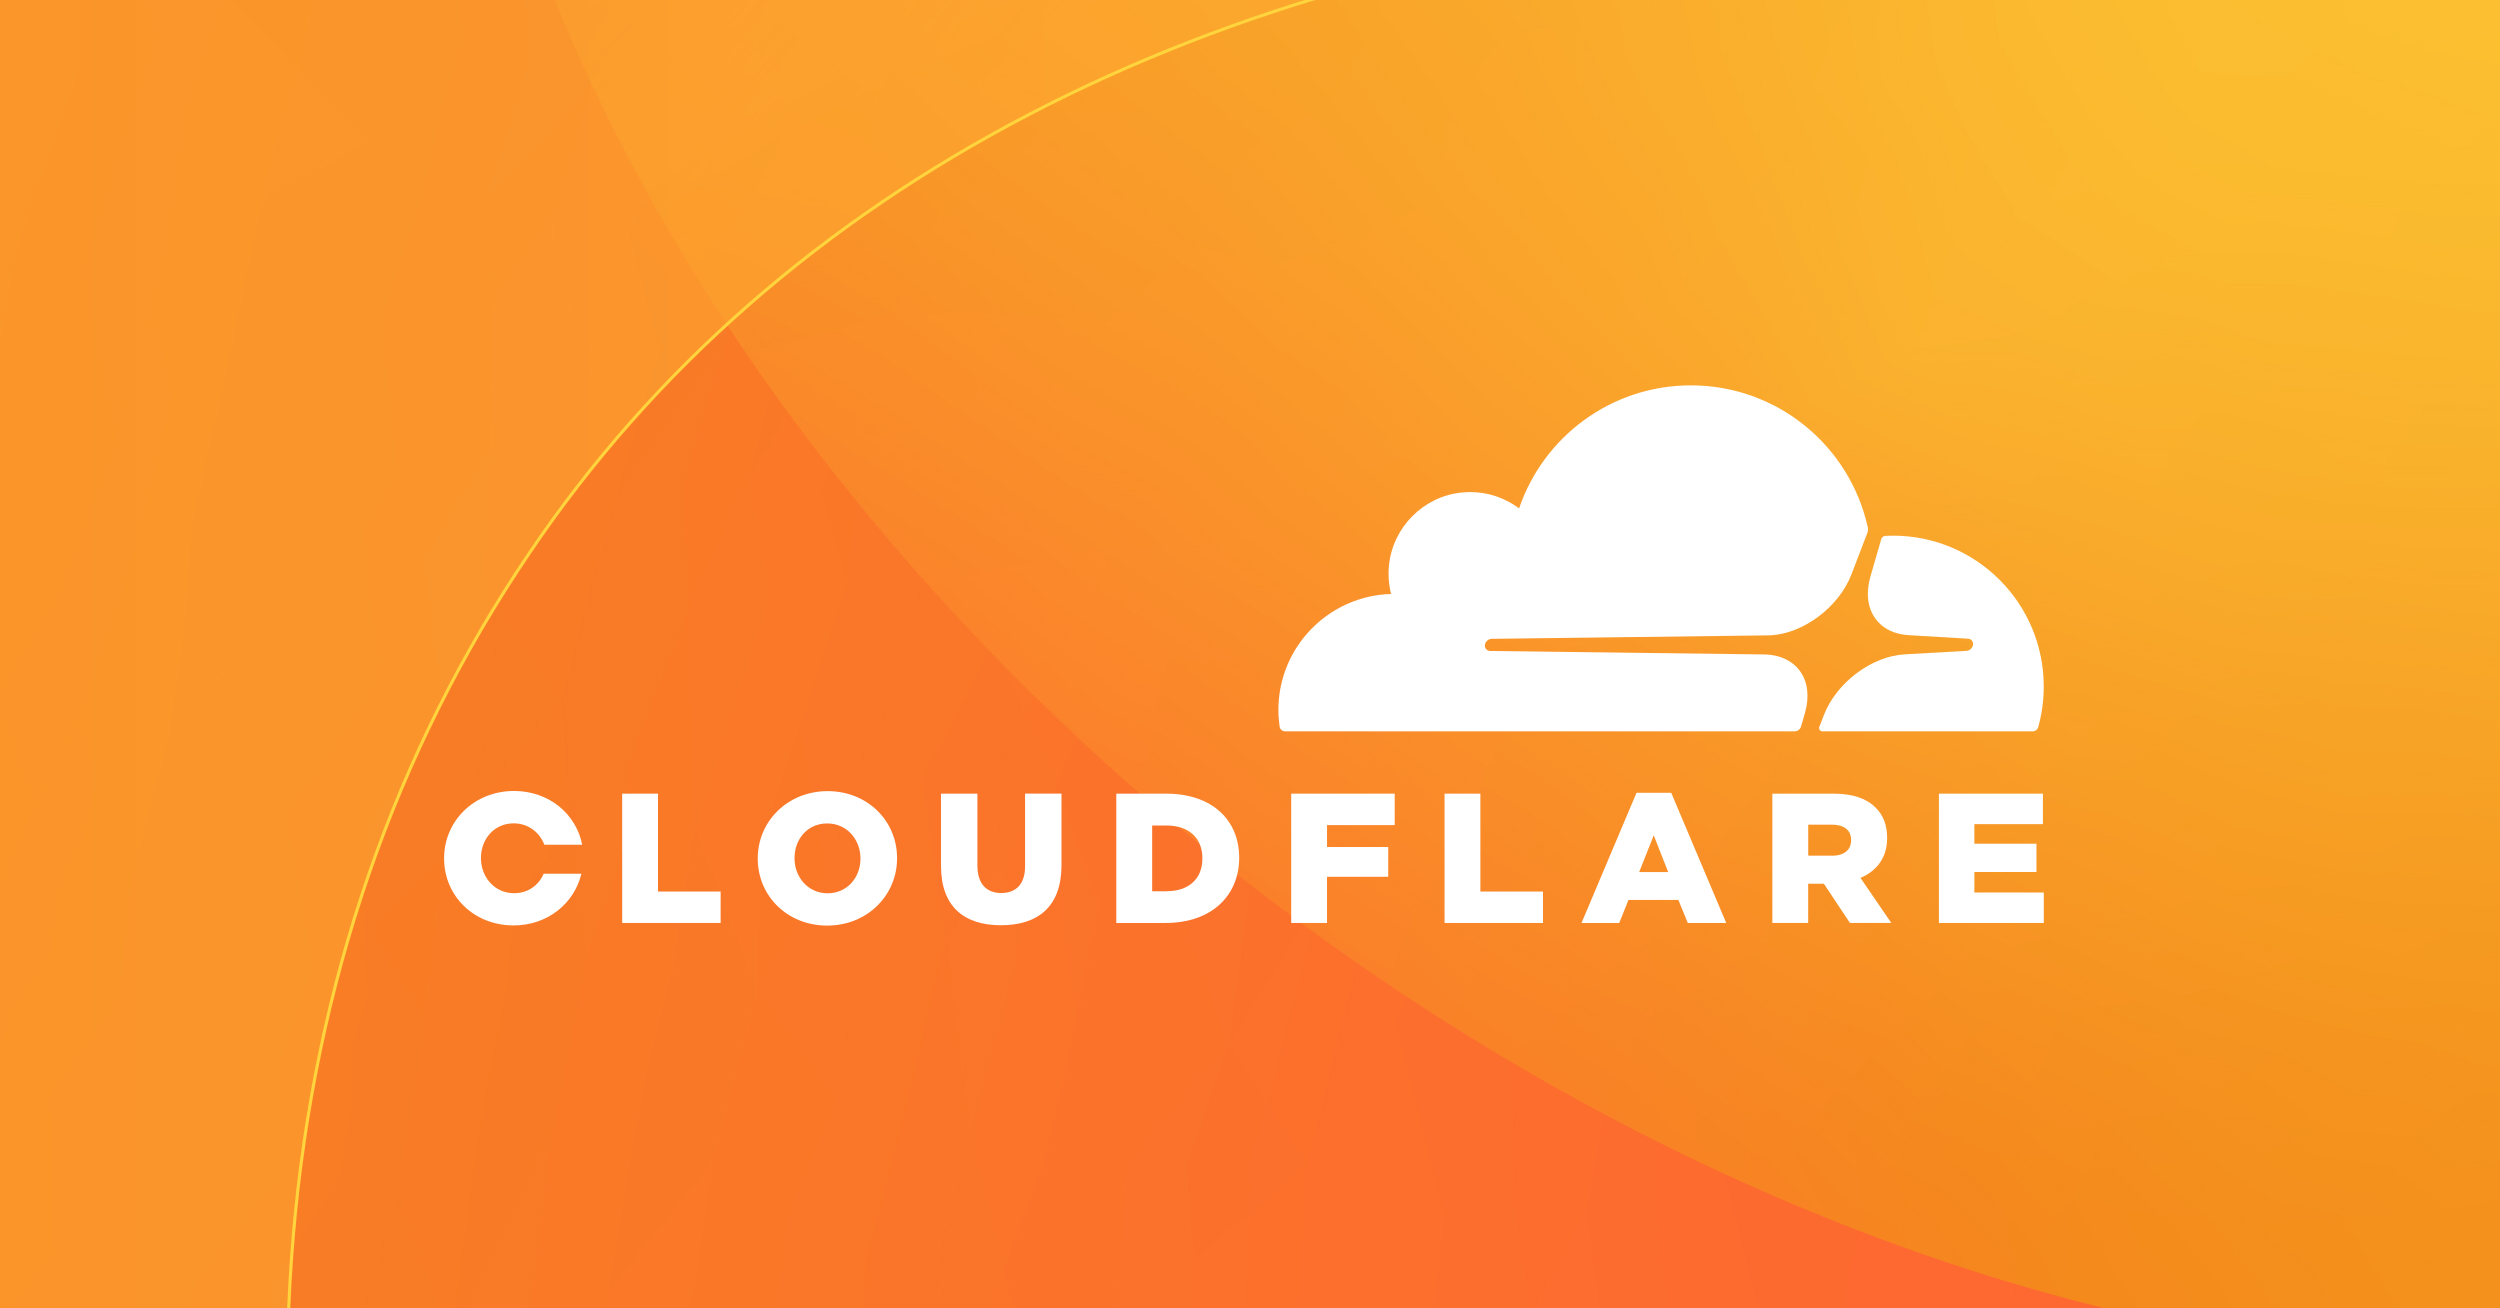 Cloudflare (NET) Stock Analysis Amid Recent Valuation Adjustment